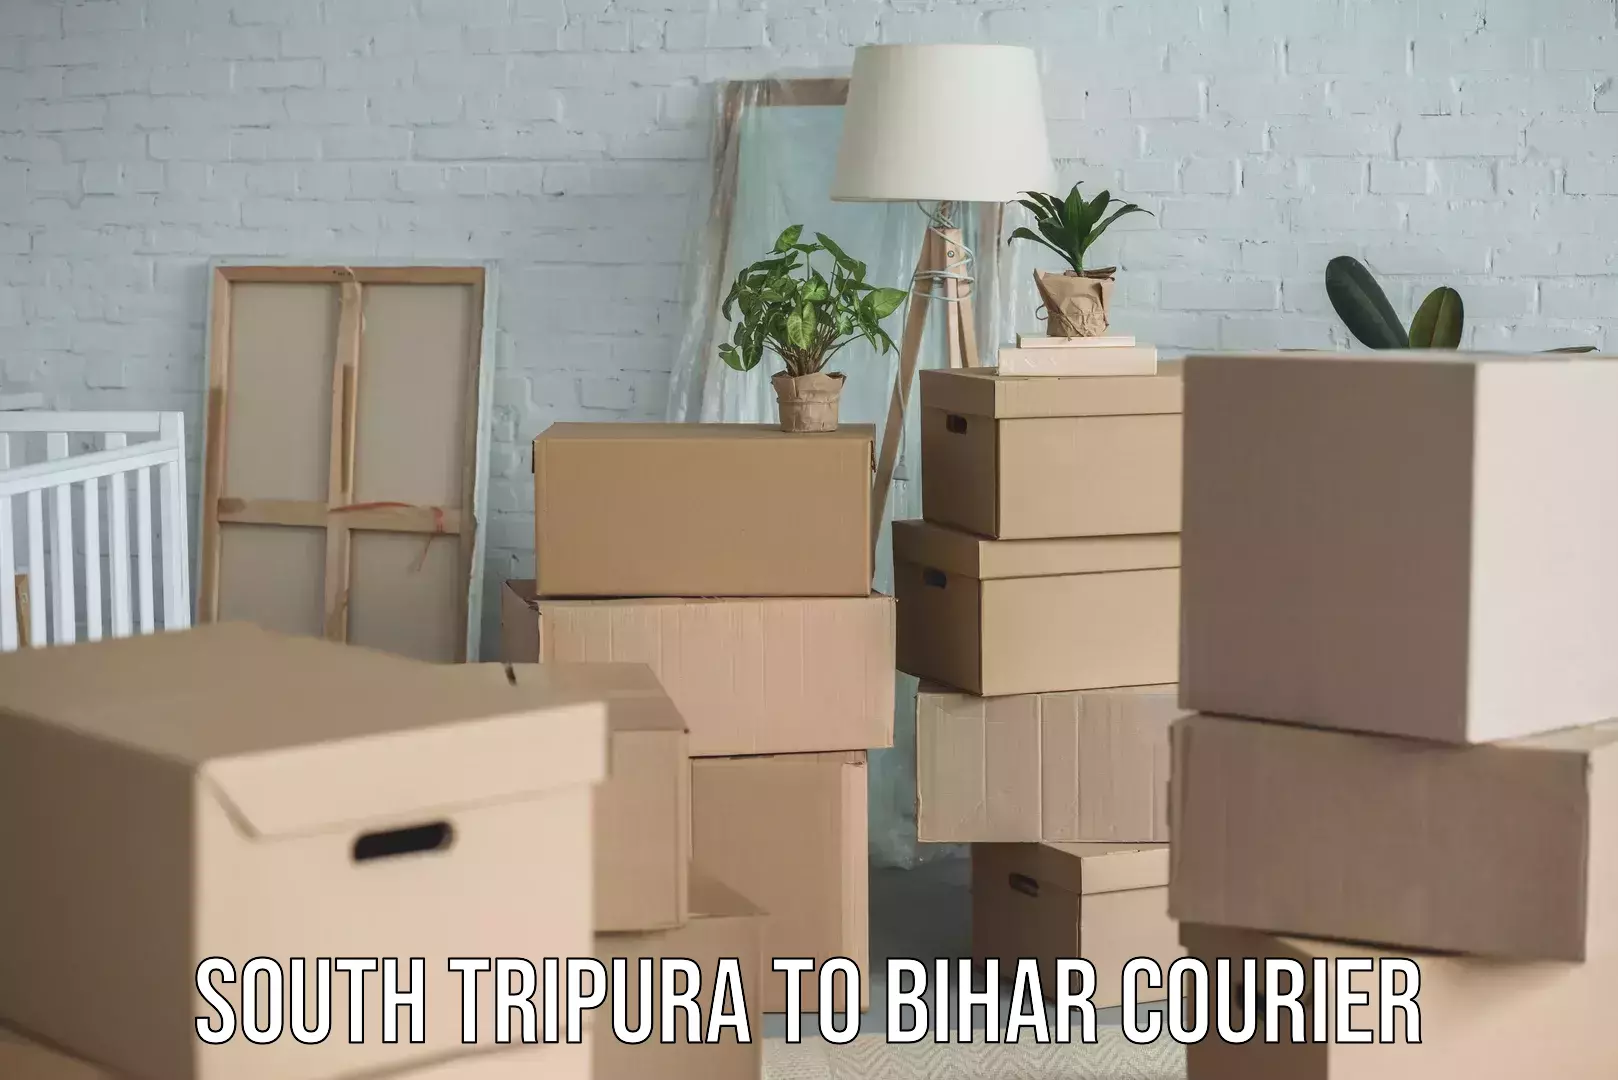 Supply chain efficiency South Tripura to Bihar